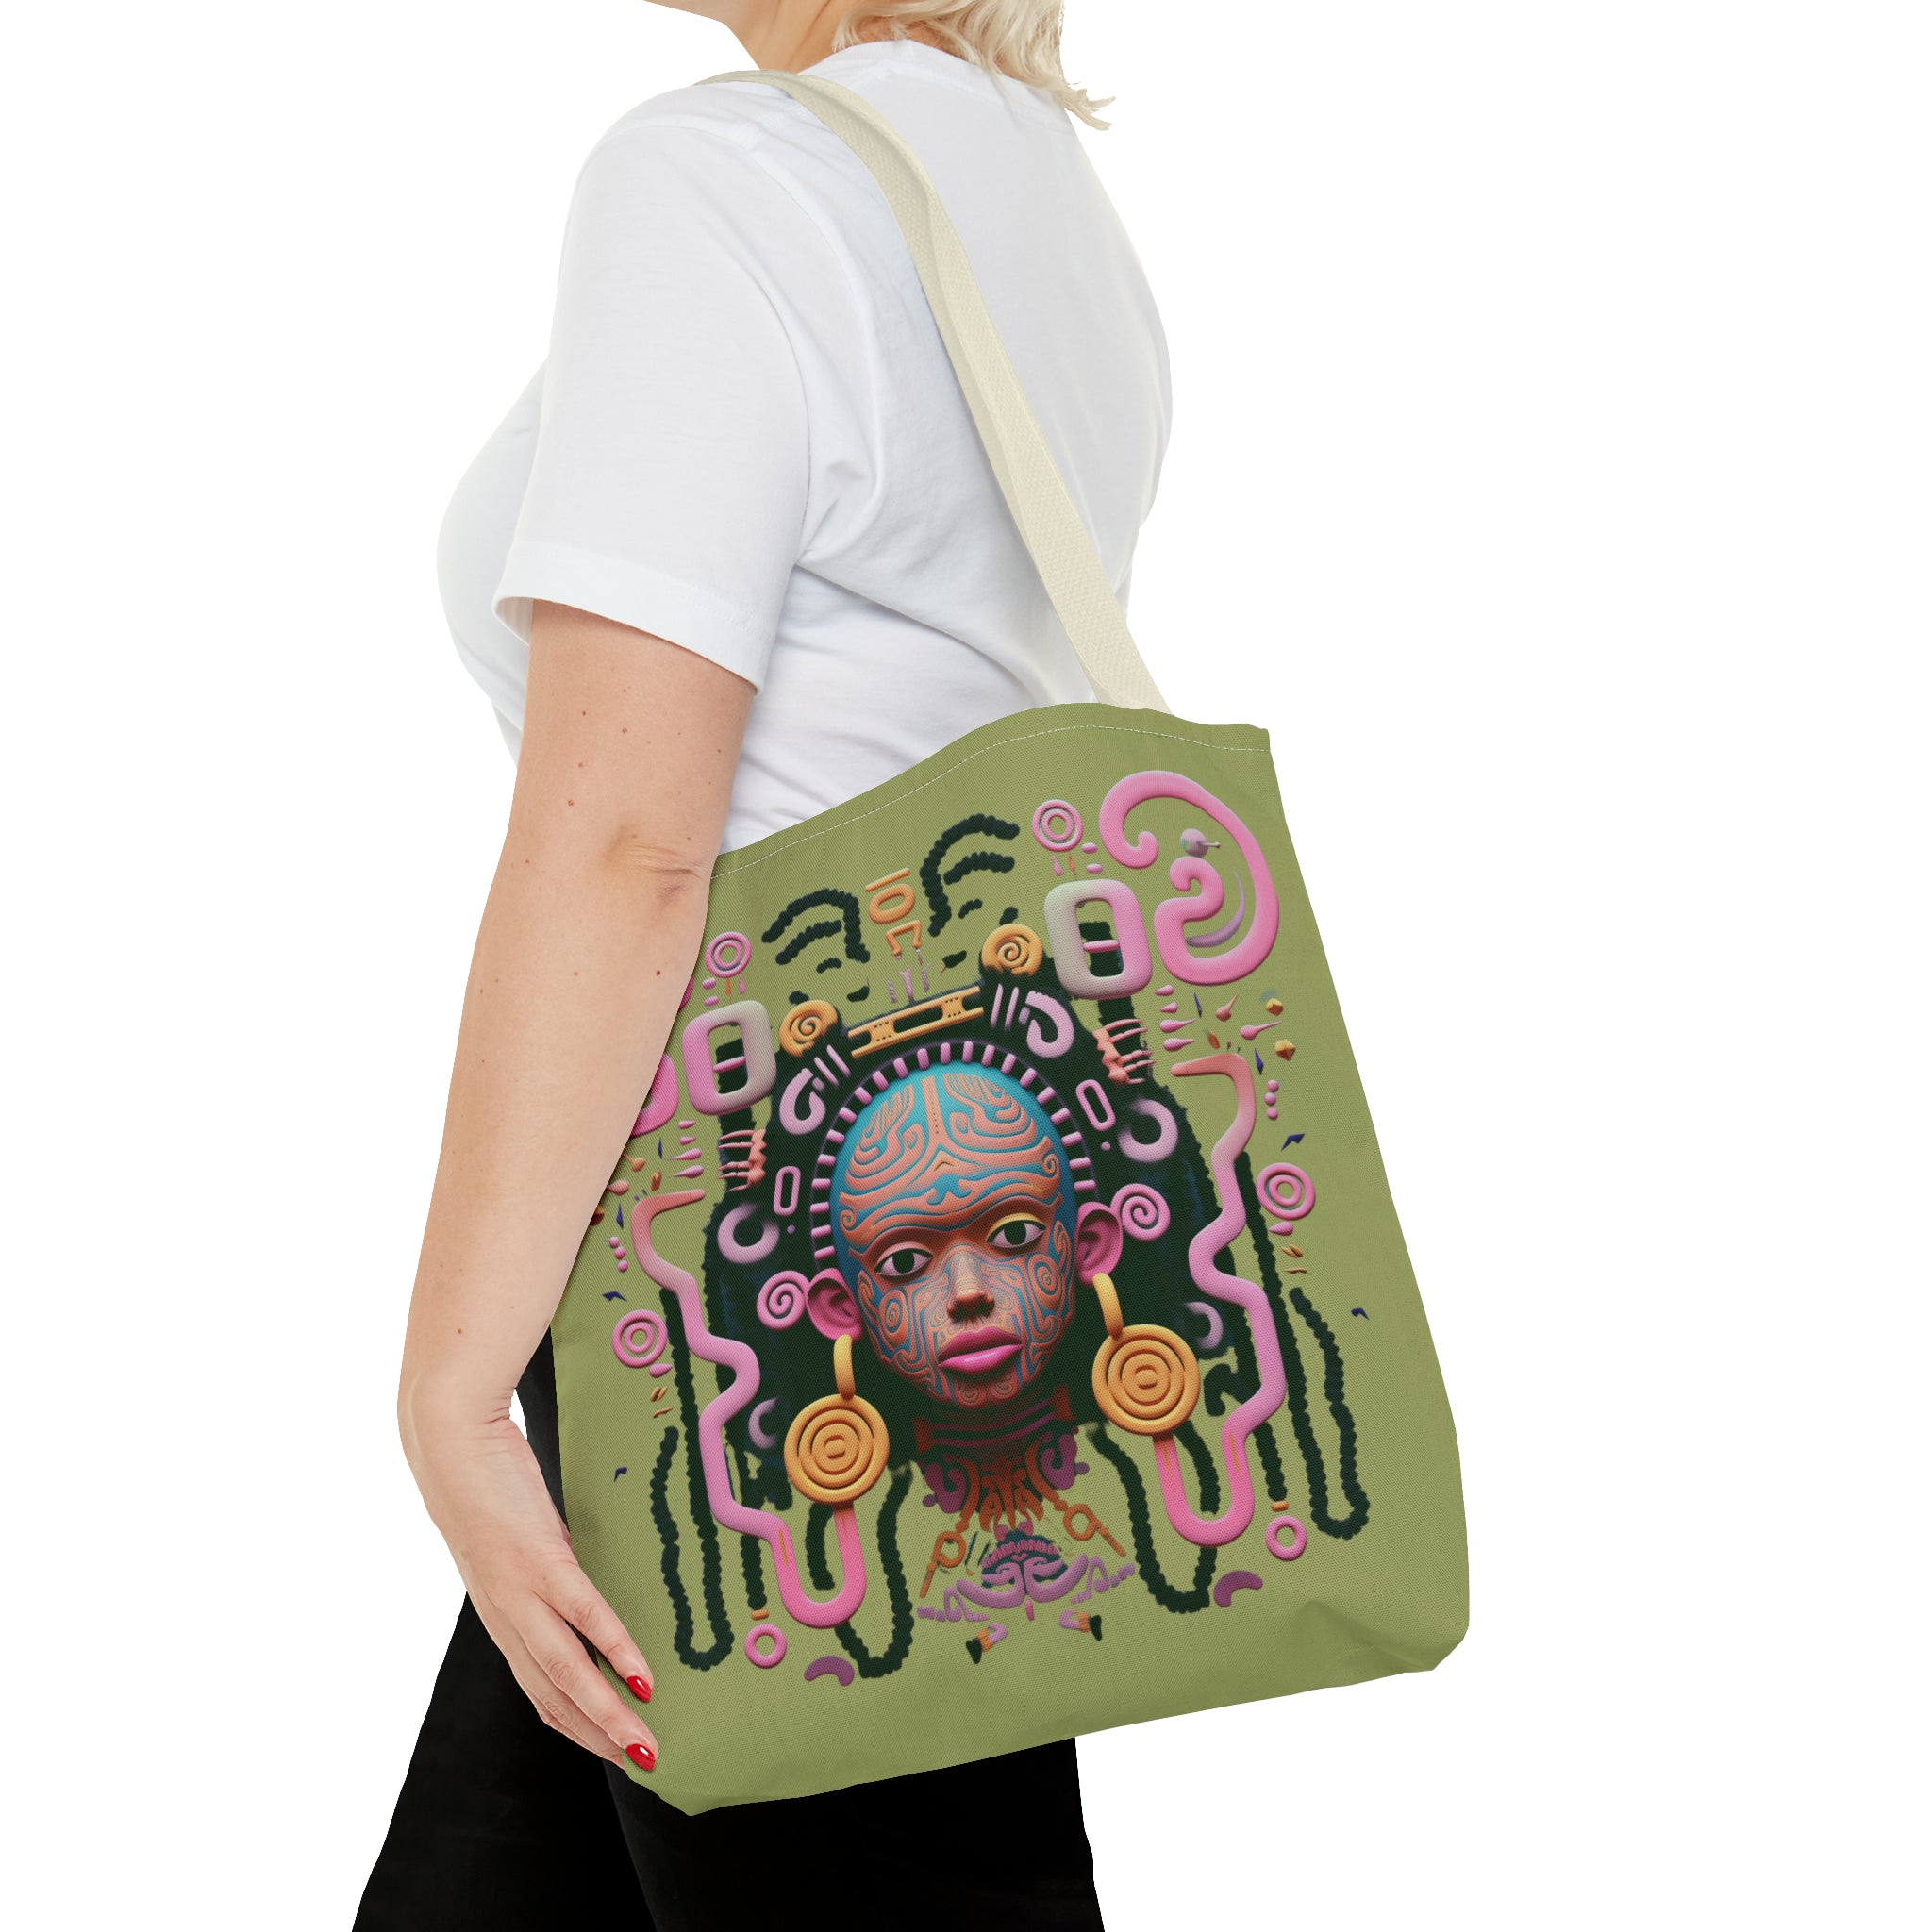 “She Defies” Tote Bag Green